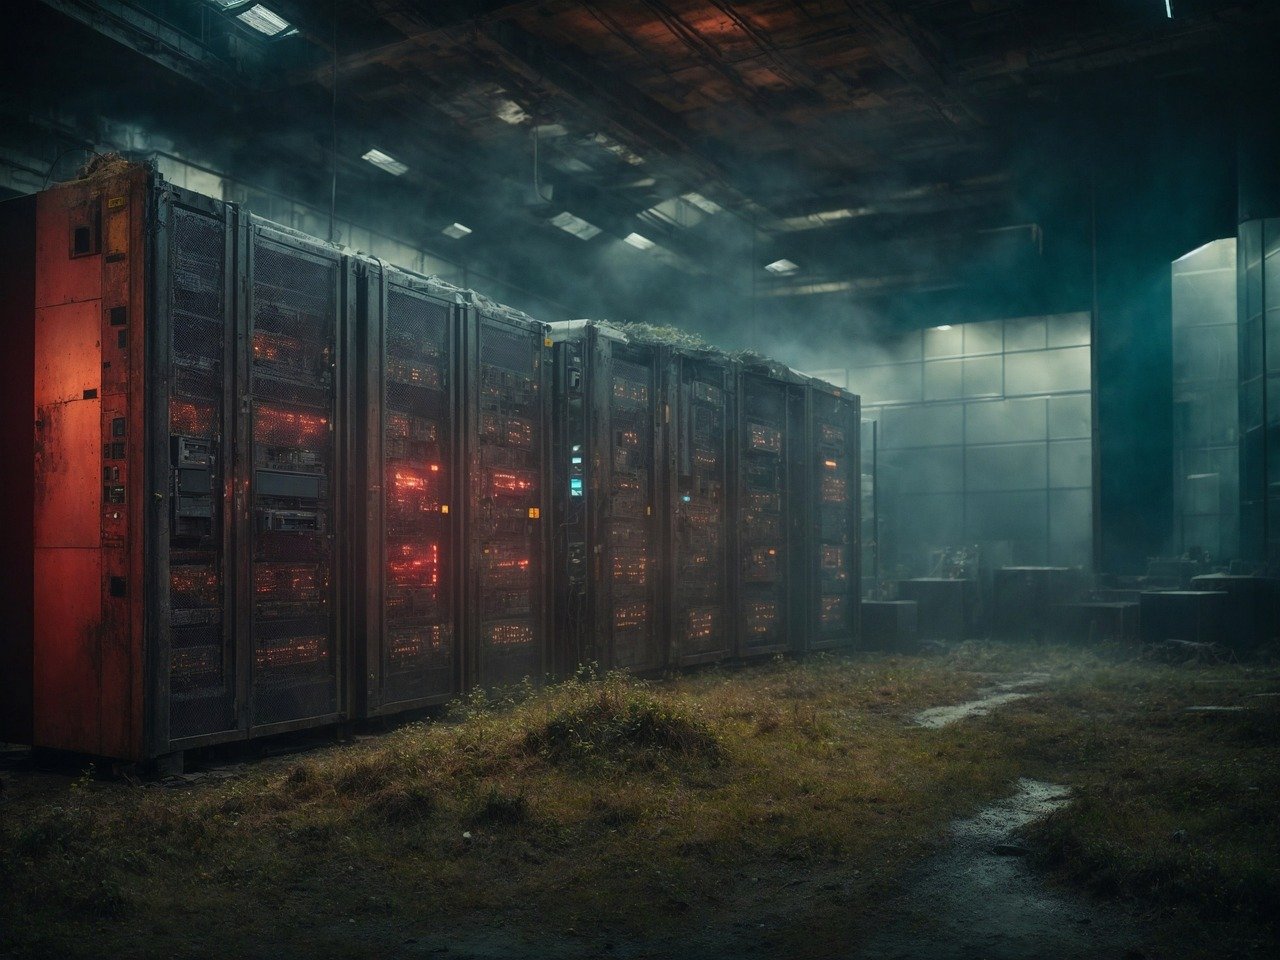 Old servers in an overgrown dark room